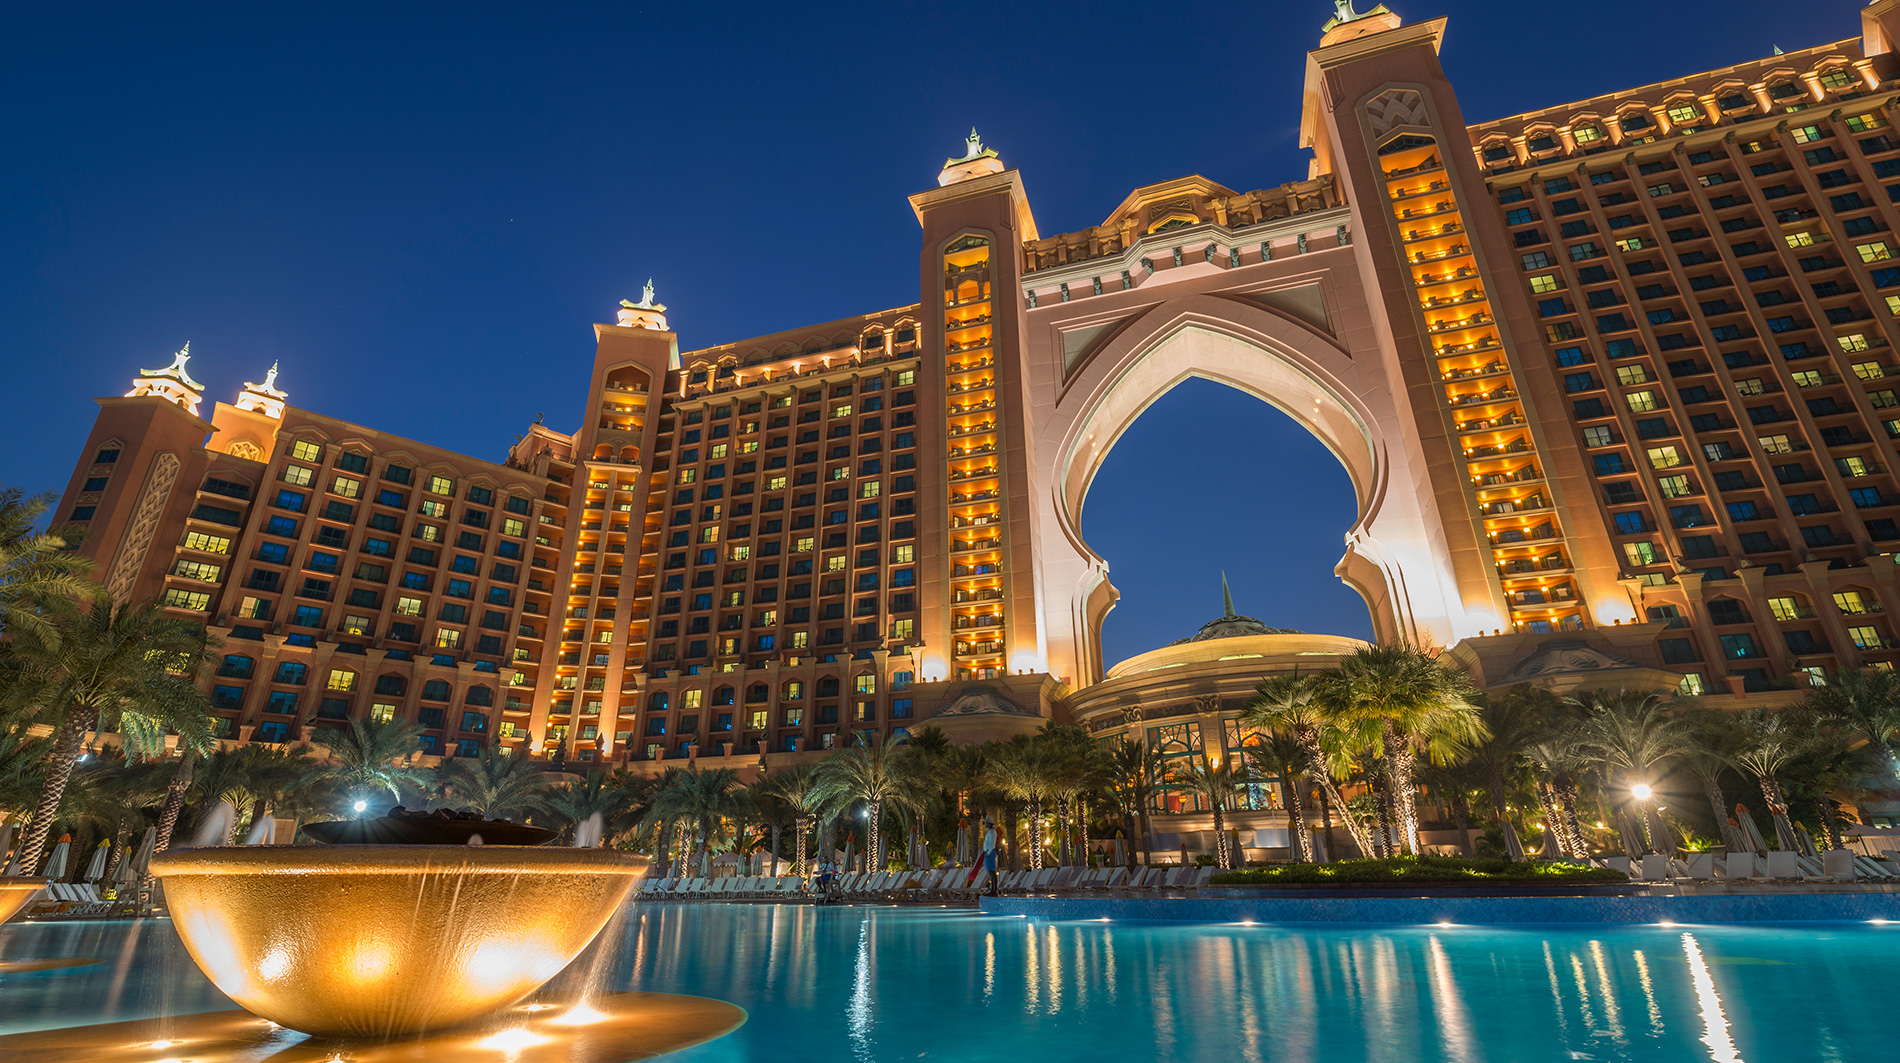 Atlantis, The Palm - Dubai Hotels - Dubai, United Arab Emirates ...